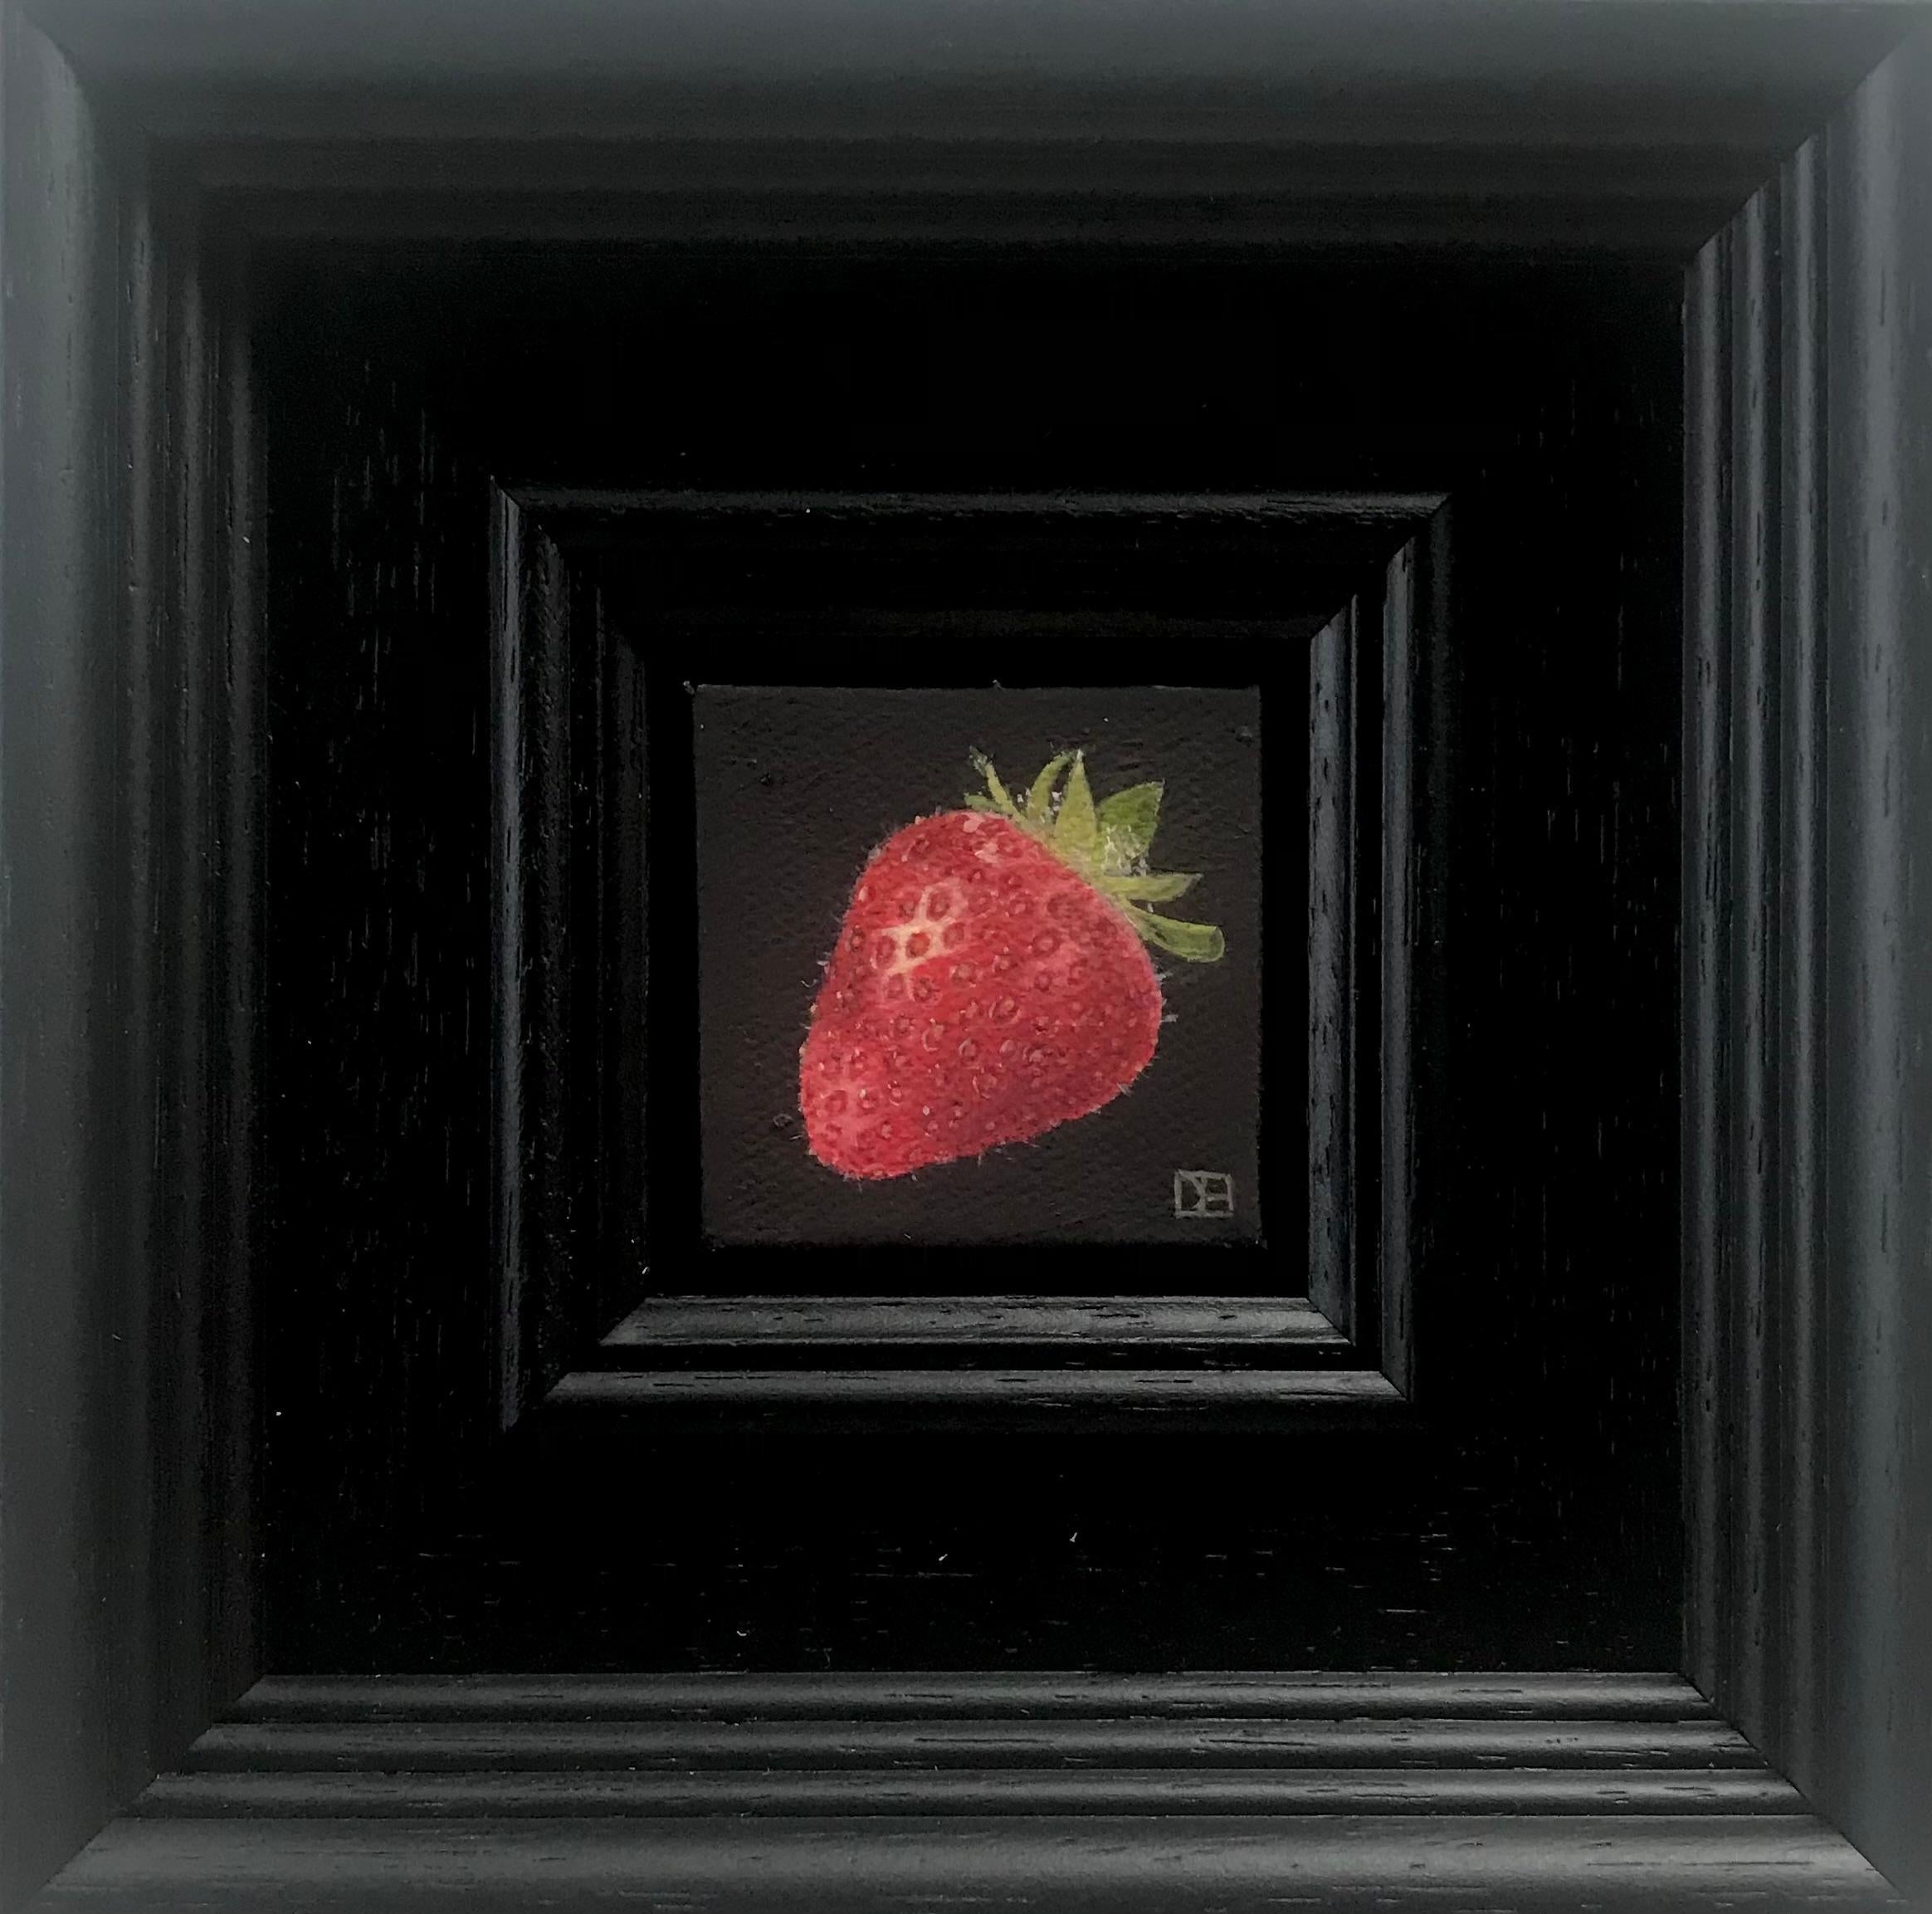 Dani Humberstone  Figurative Painting - Pocket Strawberry  by Dani Humberstone, Still Life, Contemporary, Realist Art